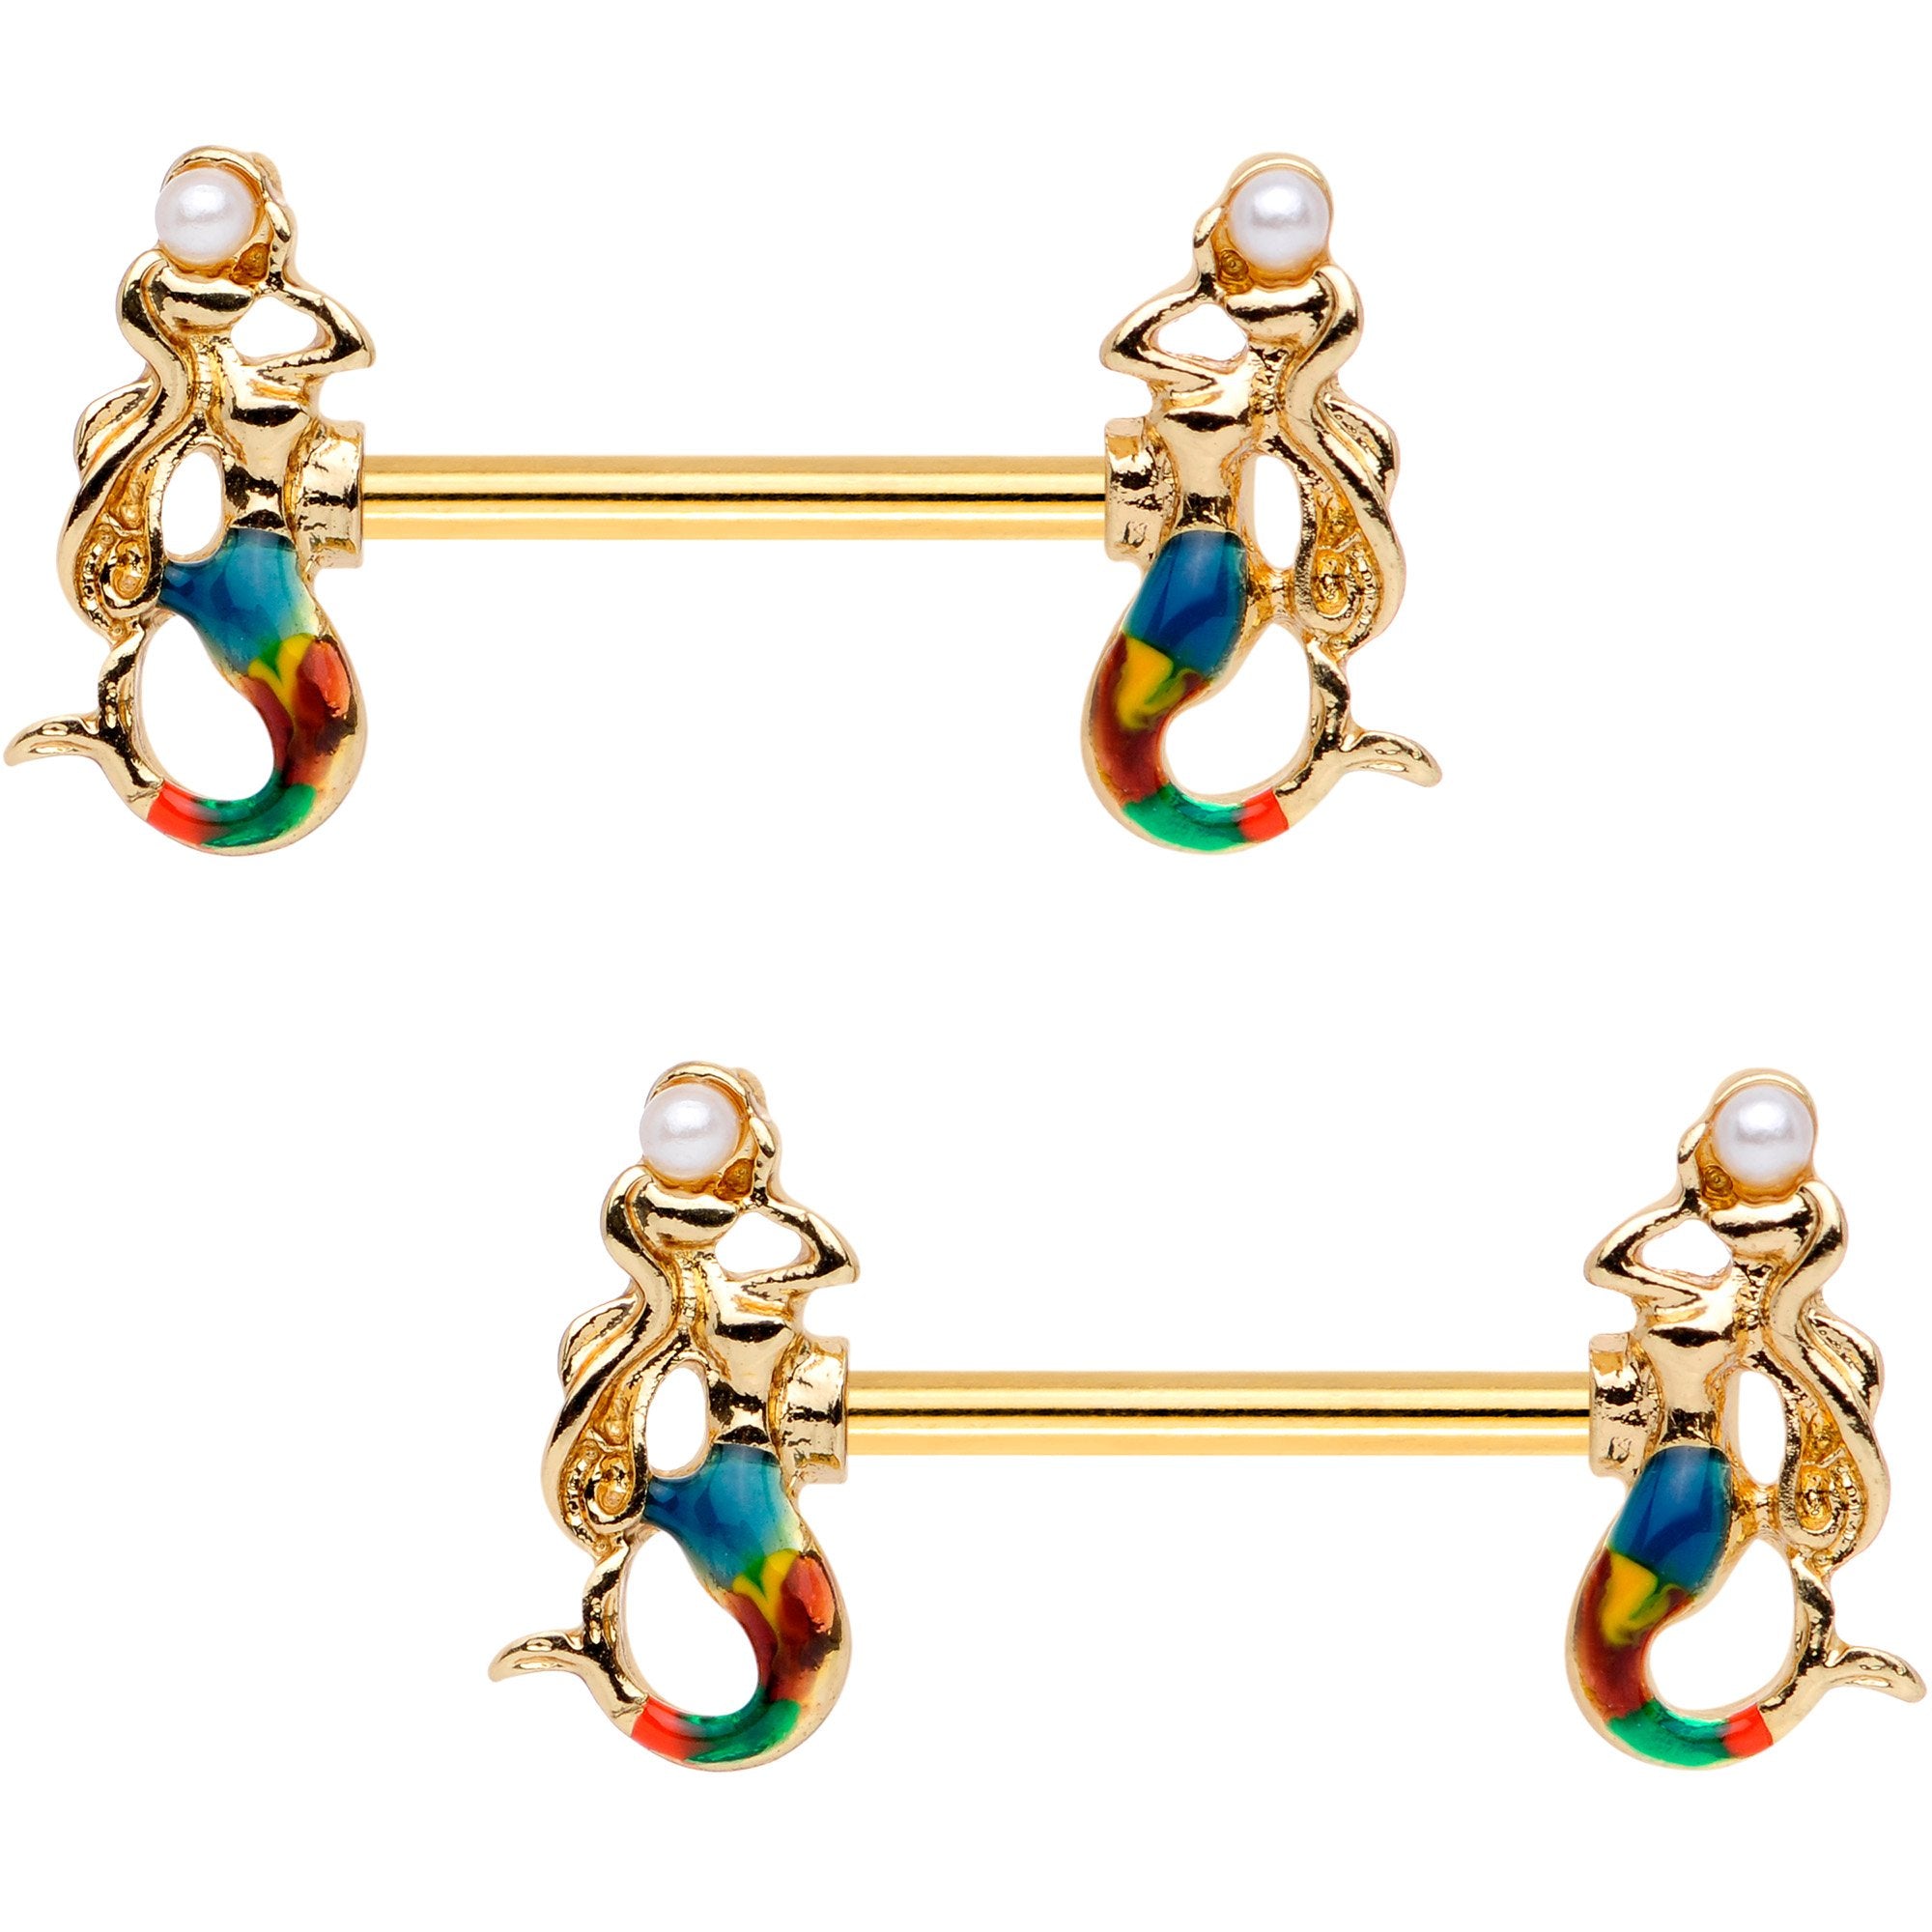 9/16 Gold Tone Anodized Rainbow Mermaid Barbell Nipple Ring Set